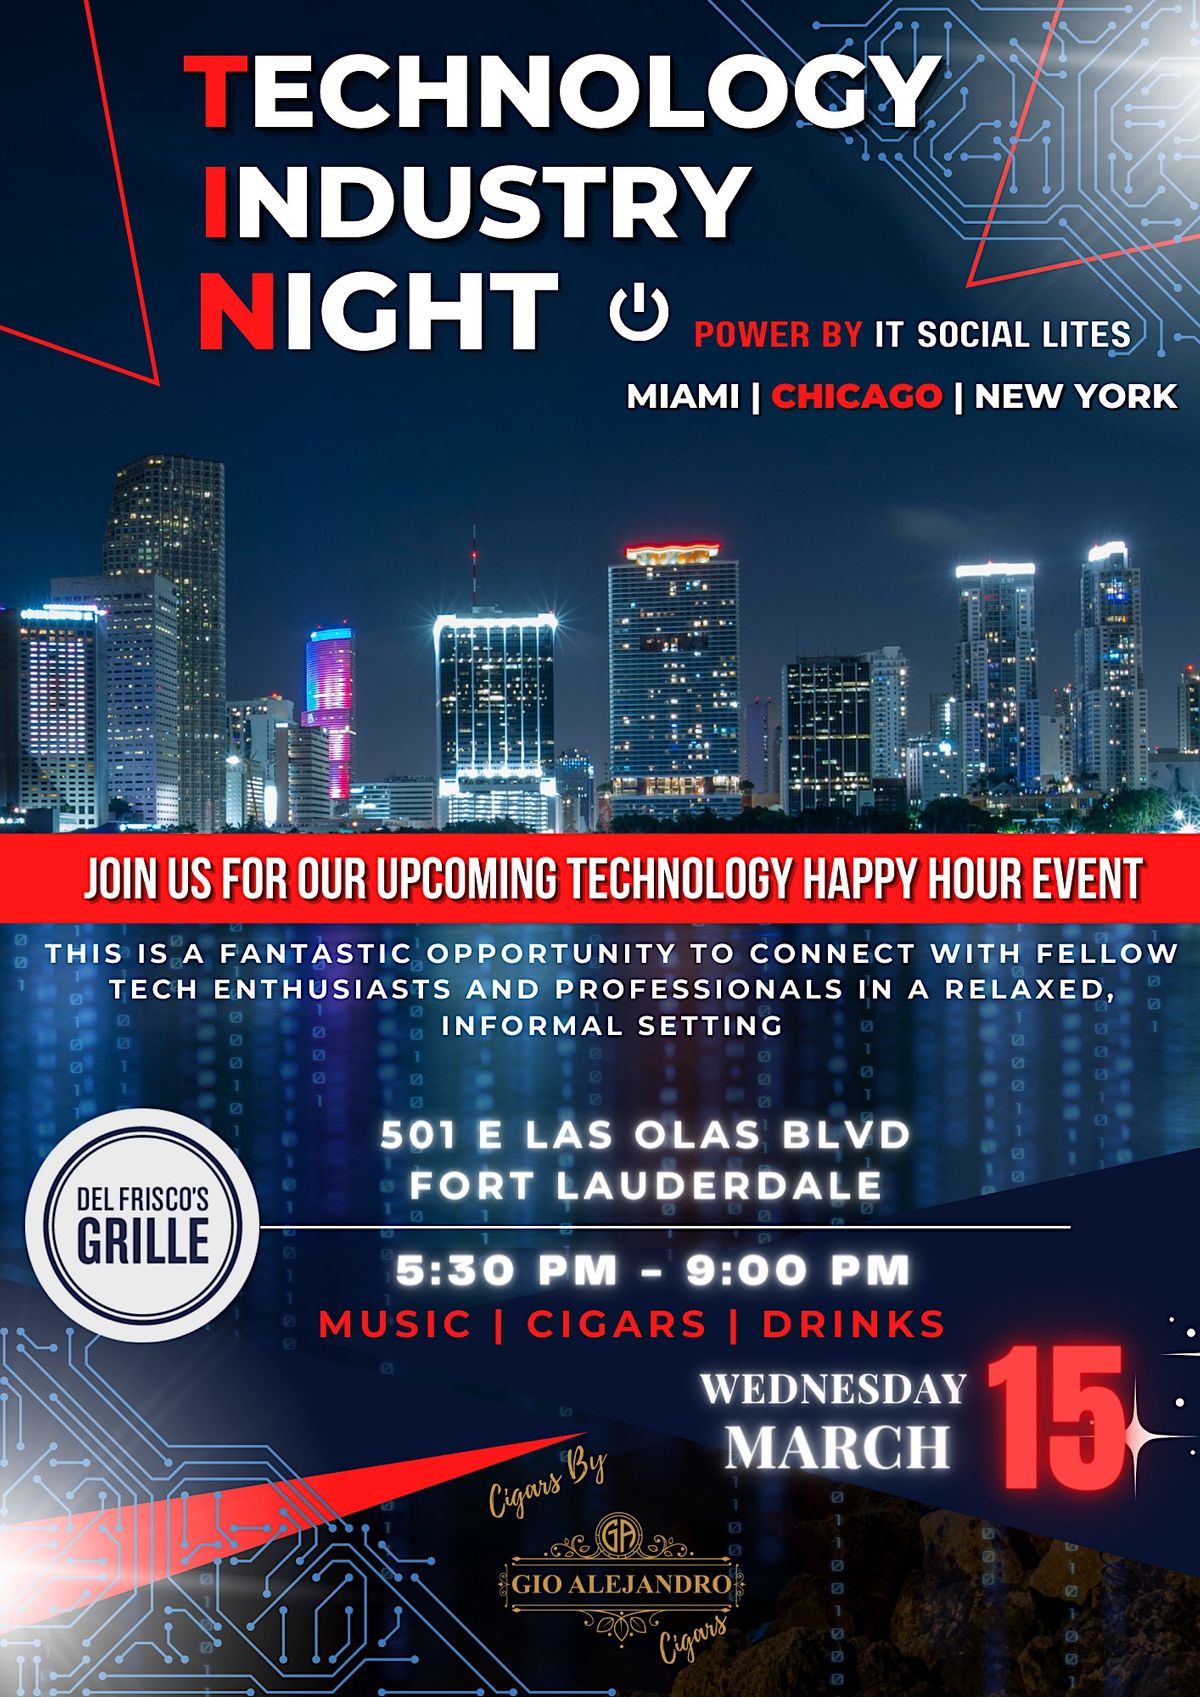 Technology Industry Night